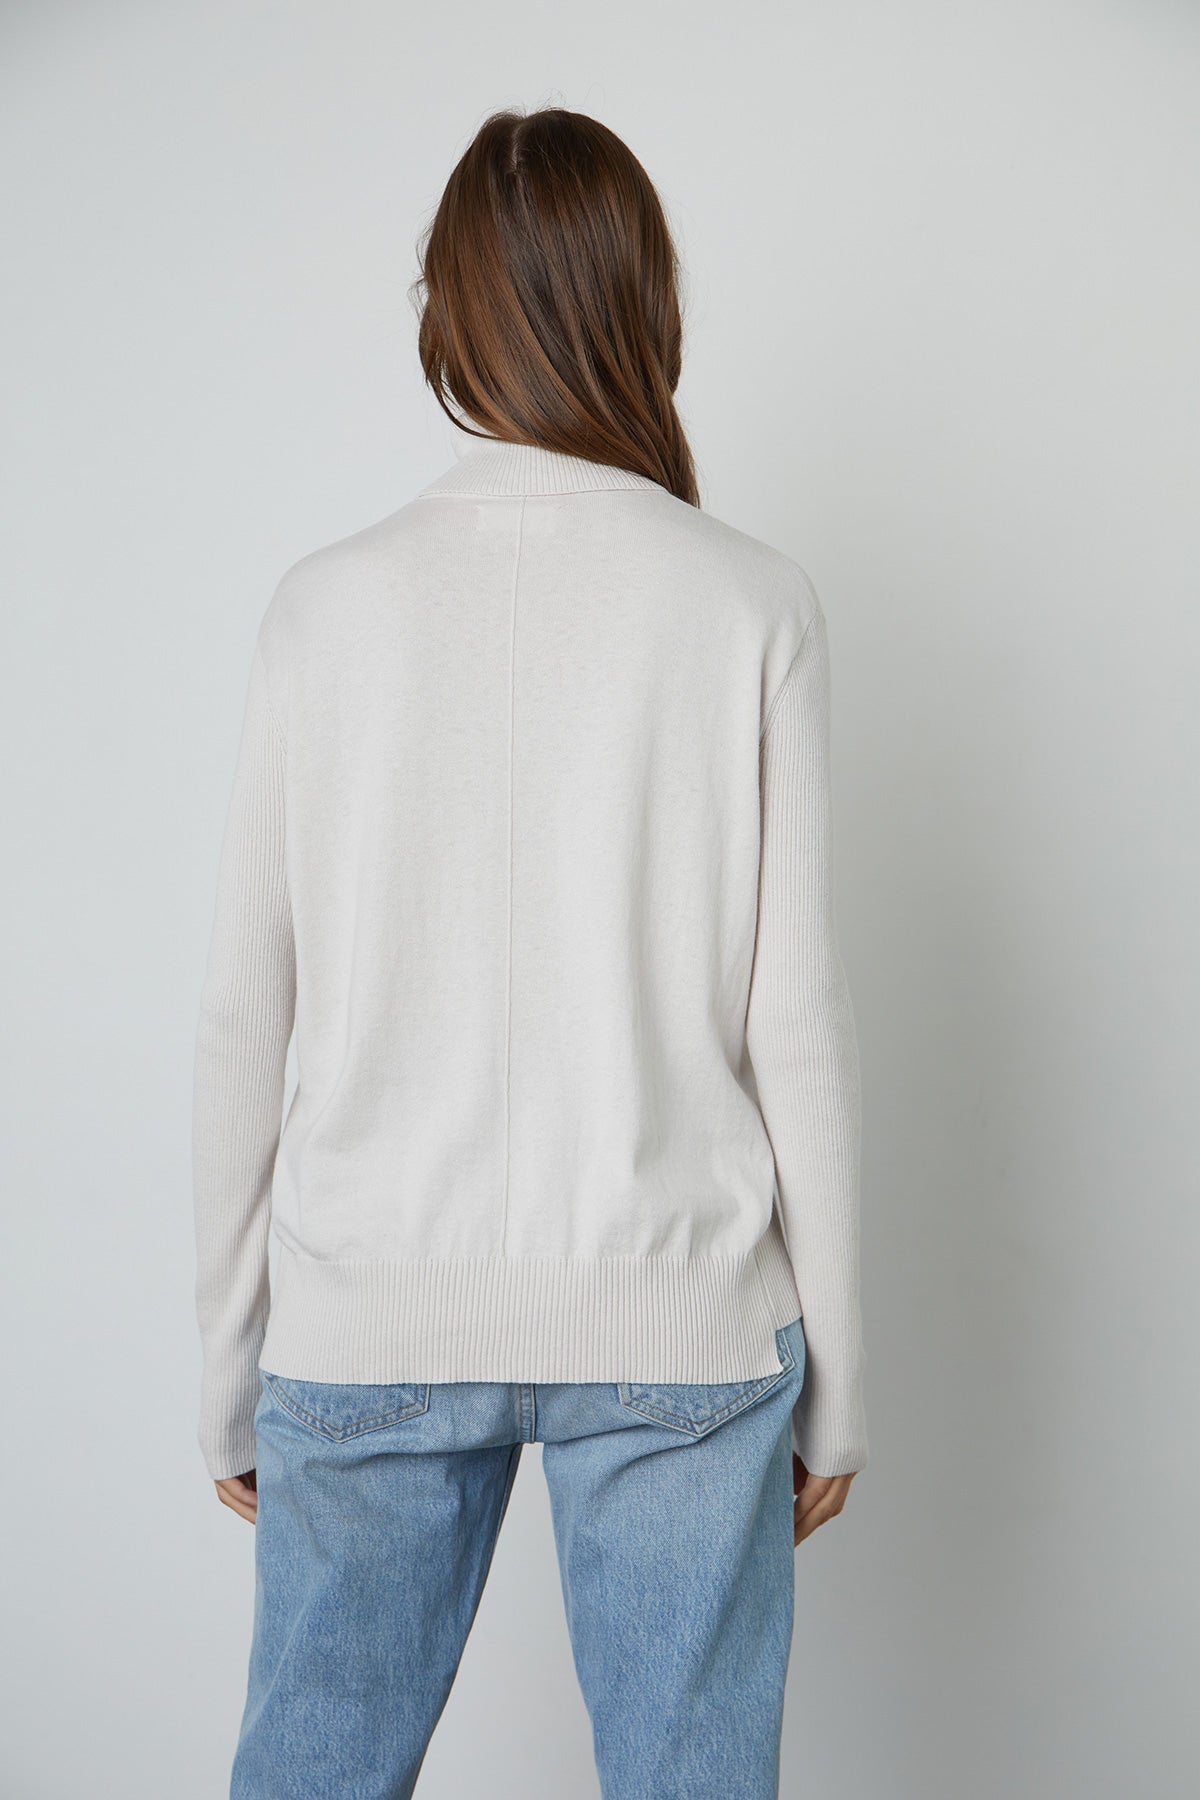 Lux Cotton Cashmere Renny Turtleneck Sweater back-25052550758593